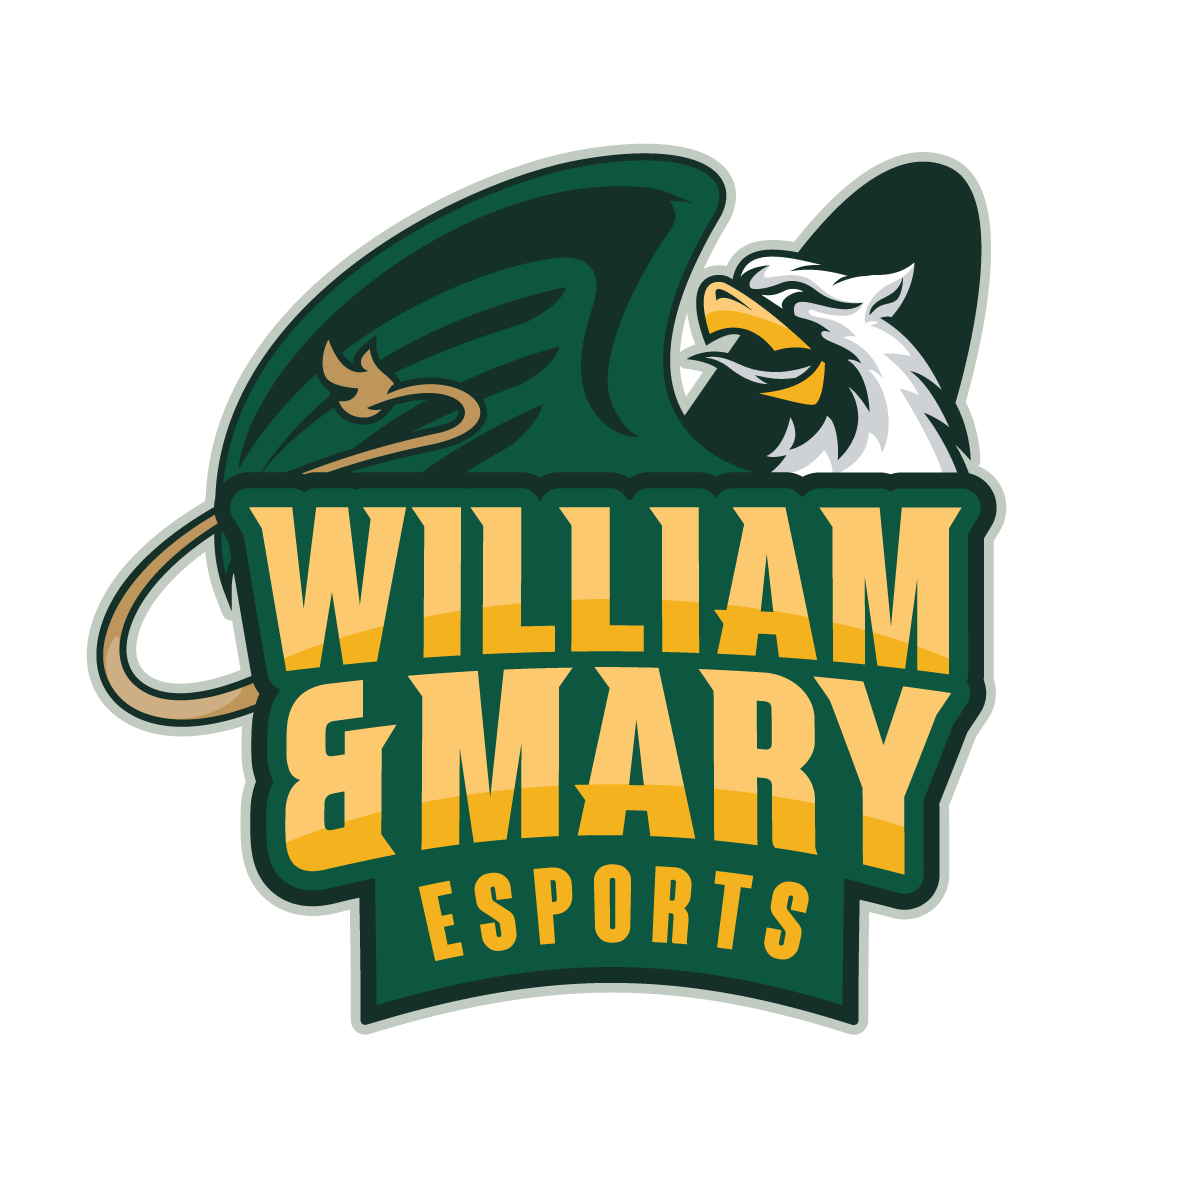 wmesports-logo_full-logo.png